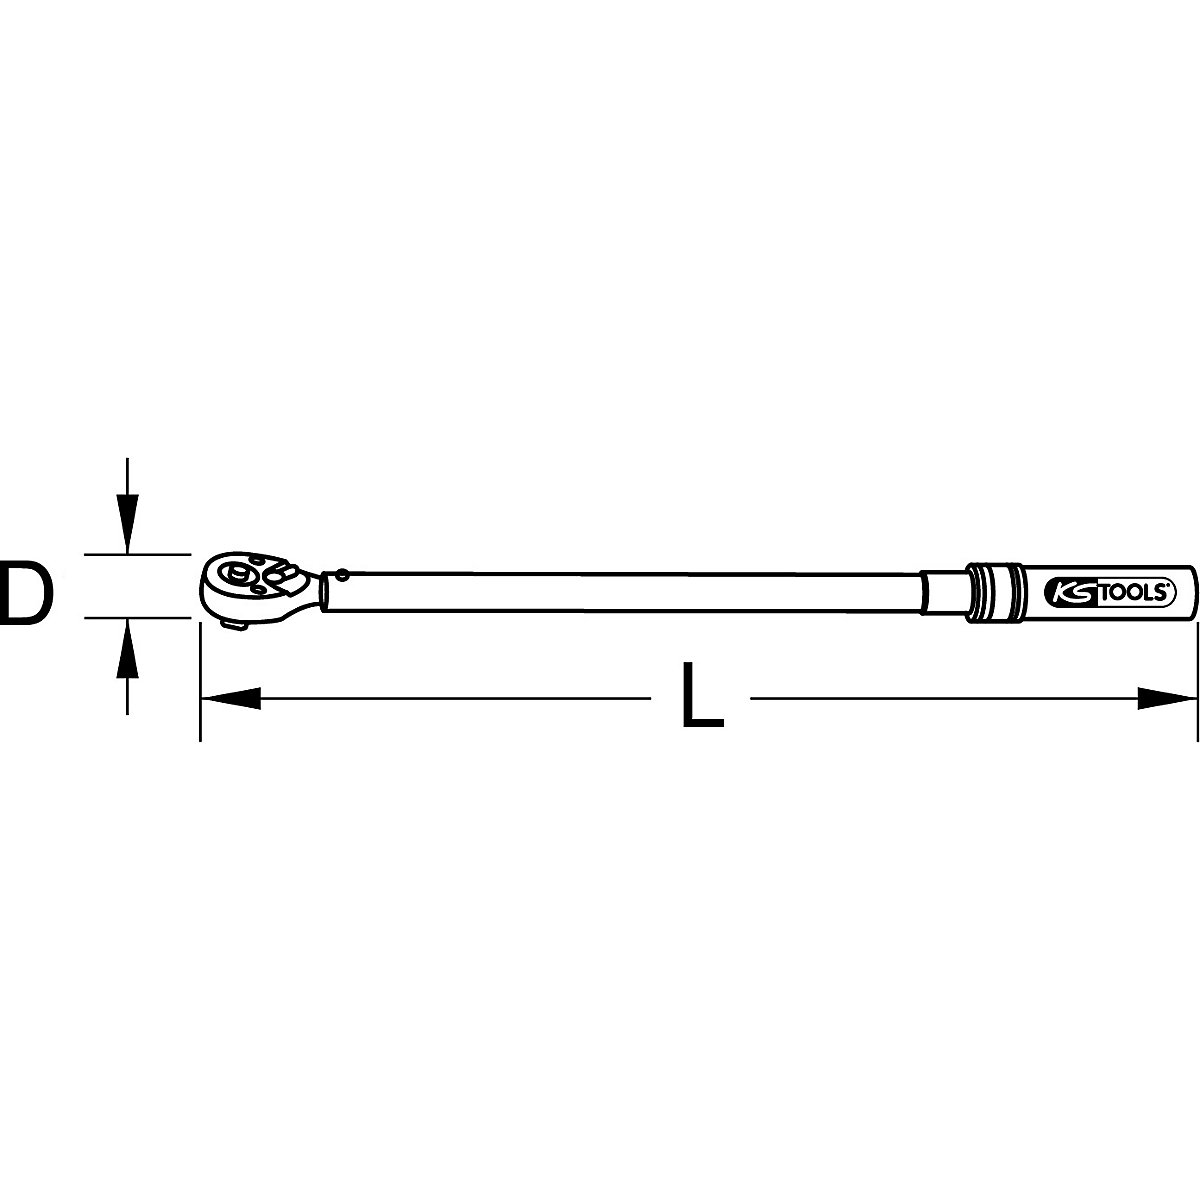 Industrijski momentni ključ, preklopna izvedba – KS Tools (Slika izdelka 9)-8